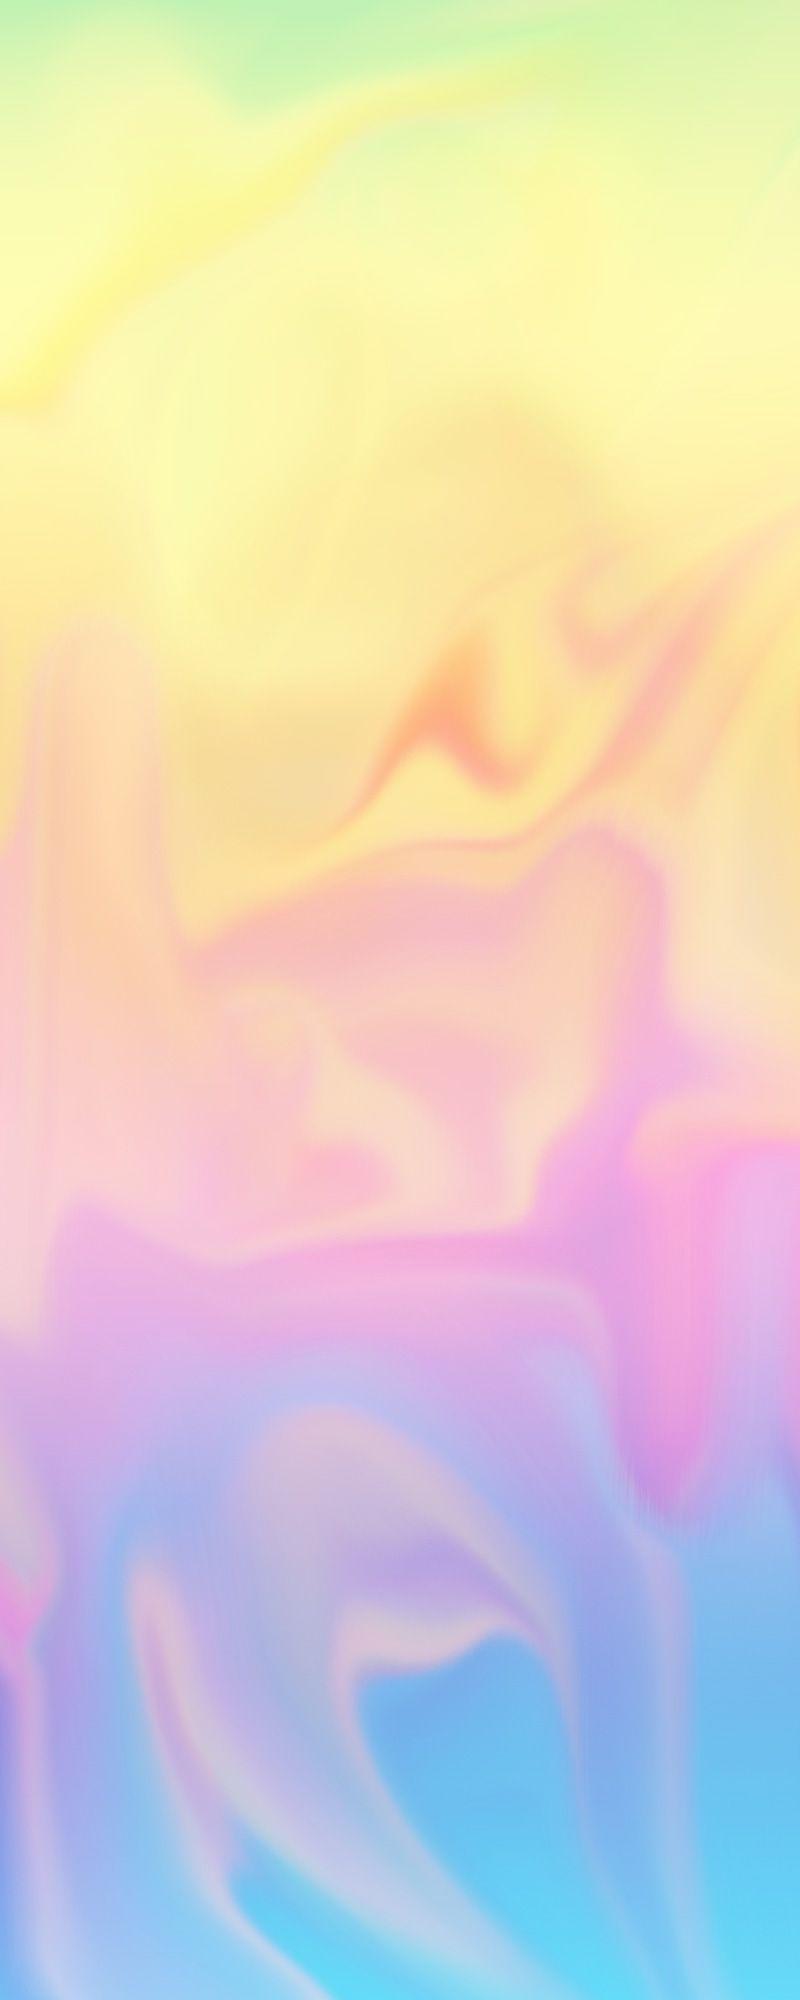 Pastel Soft Grunge Background Tumblr For